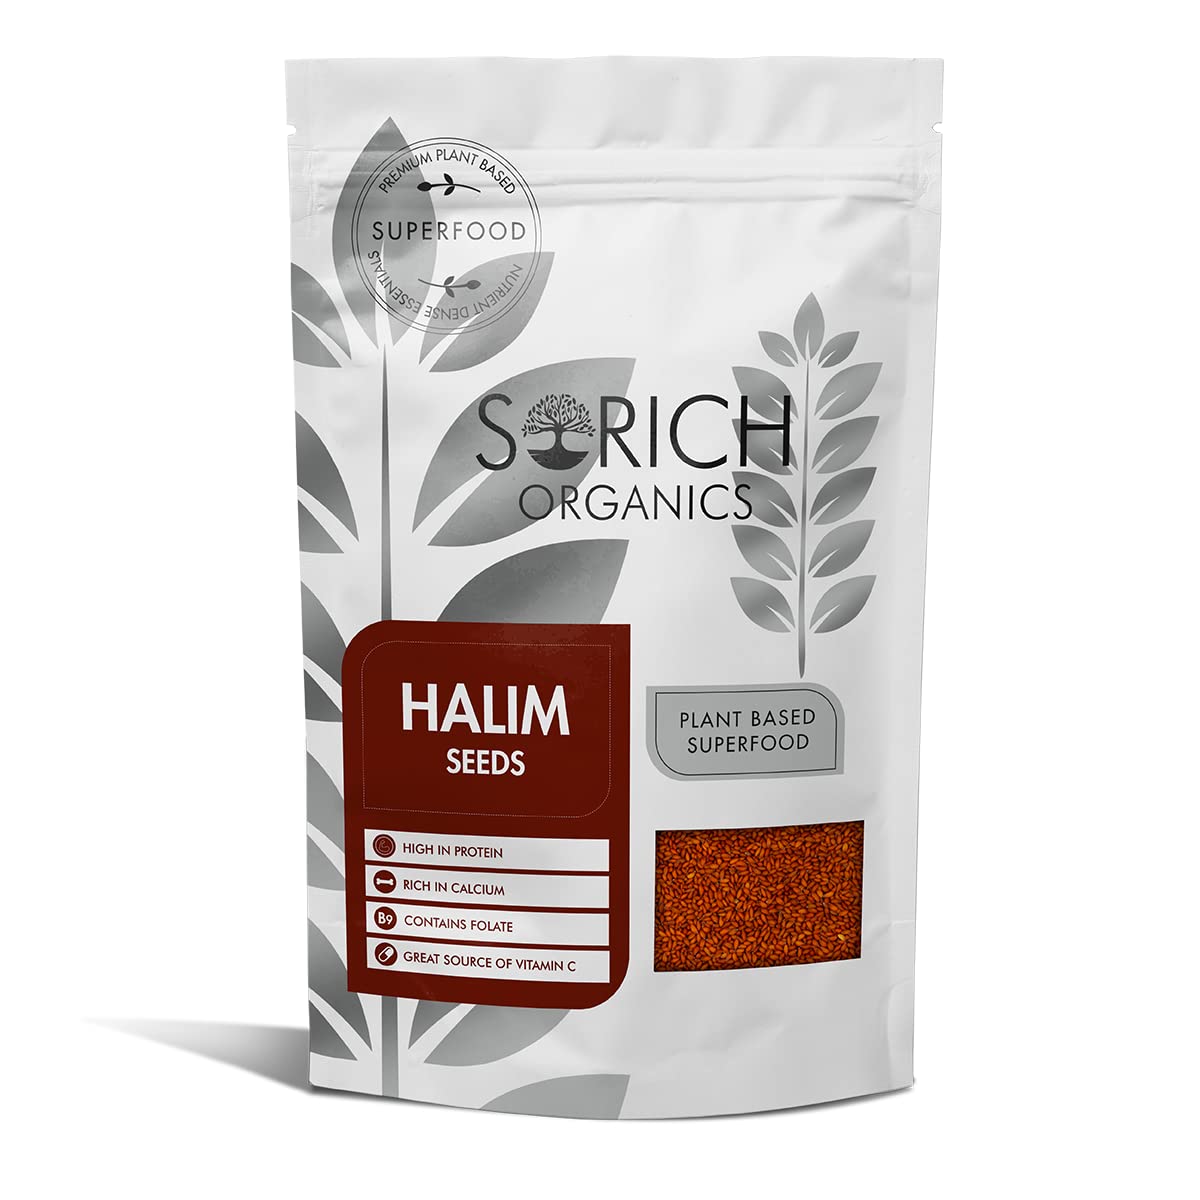 Buy Sorich Organics Halim Seeds